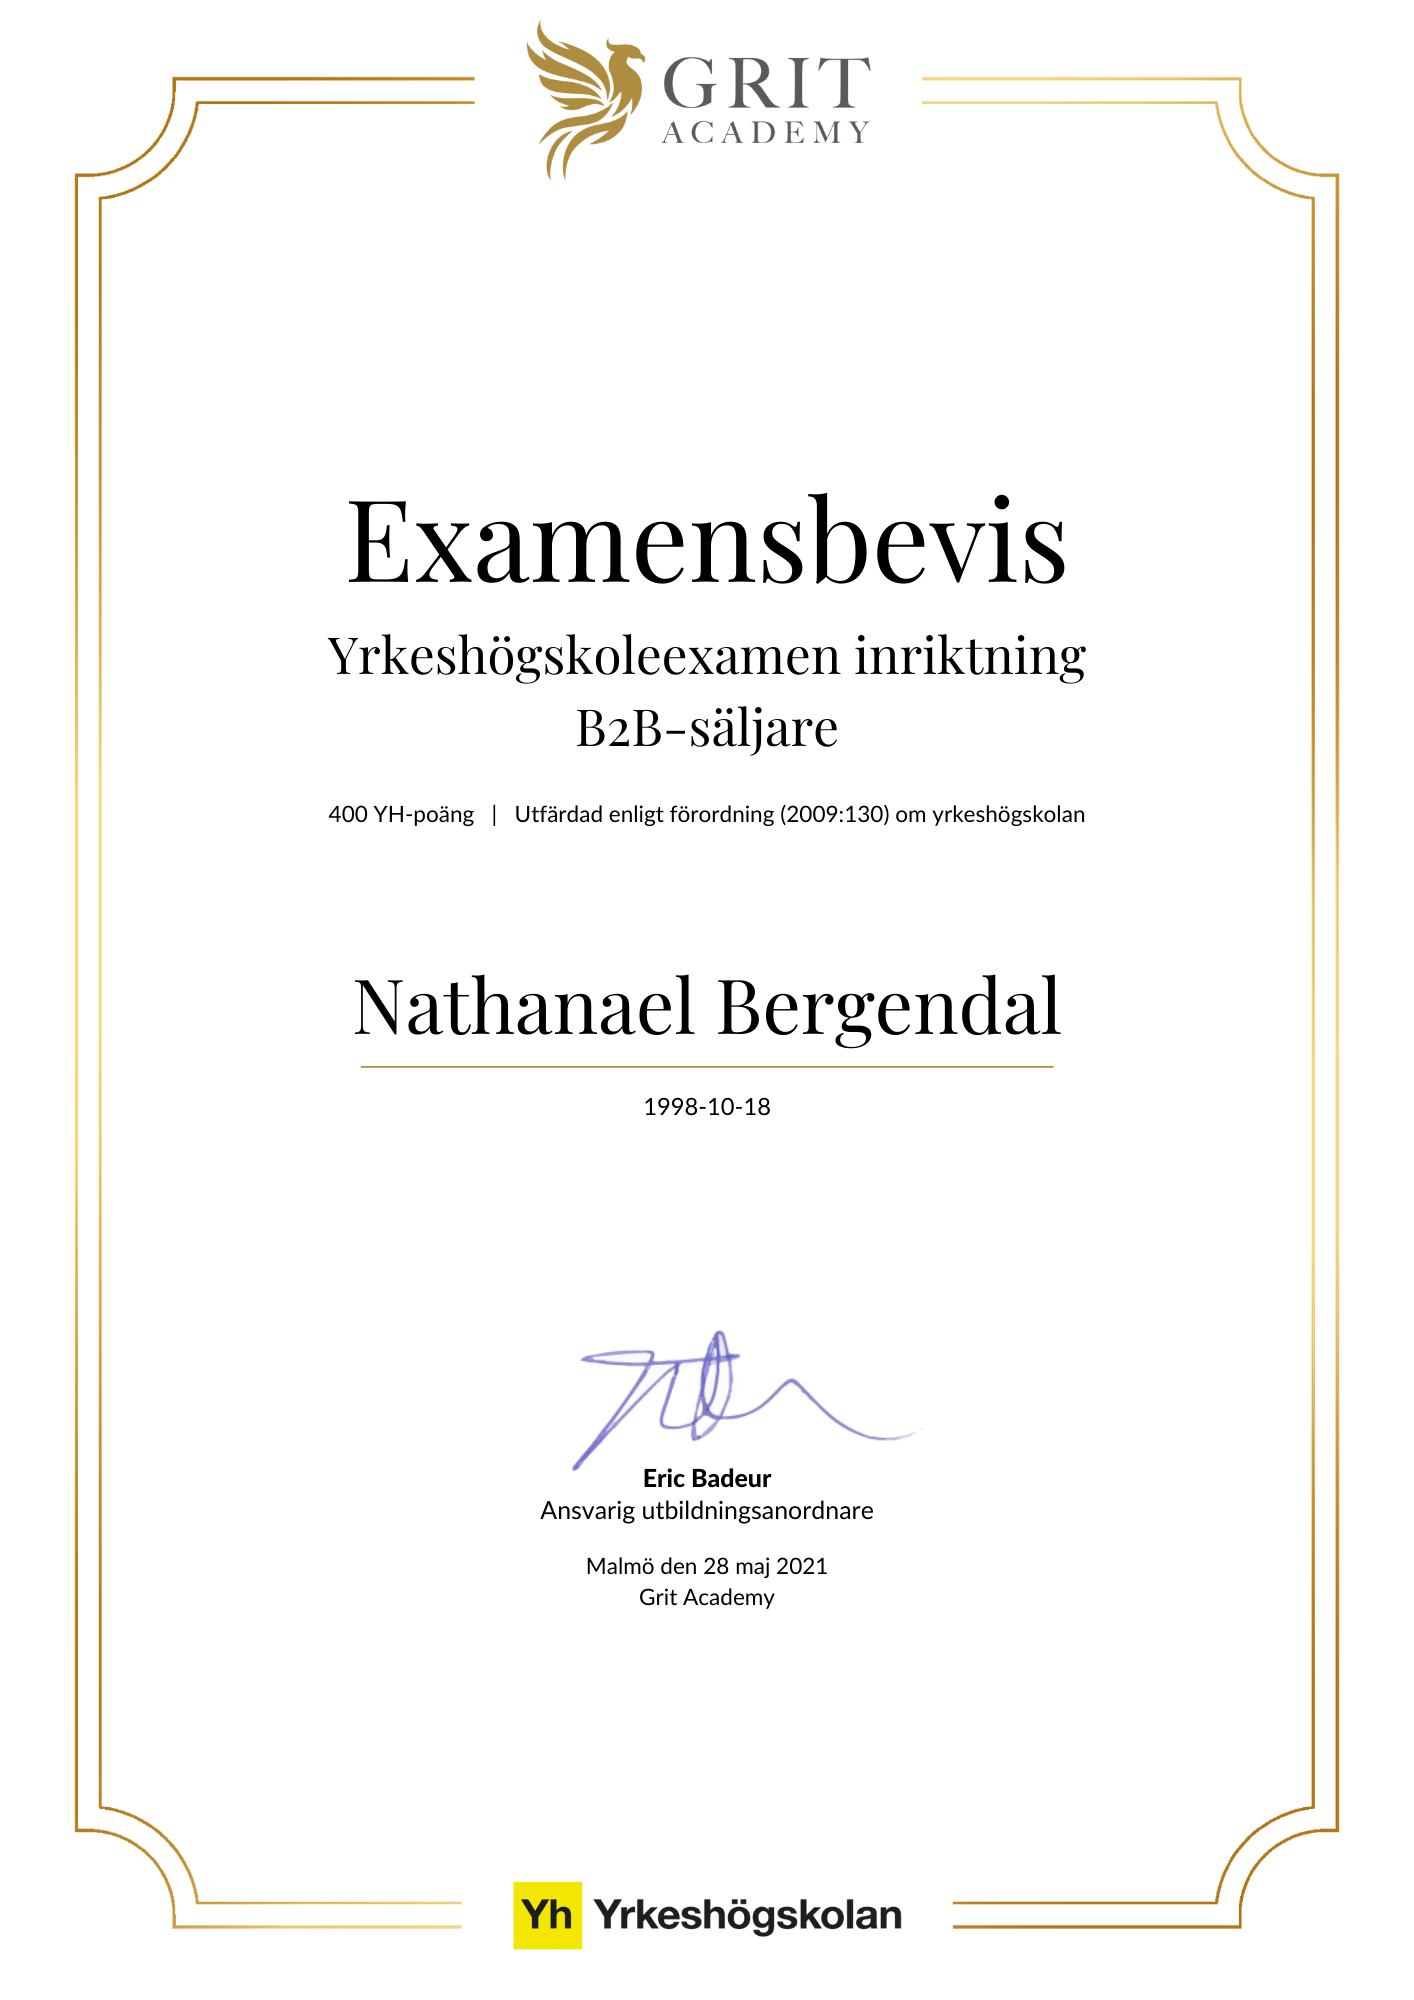 Examensbevis Nathanael Bergendal - 1